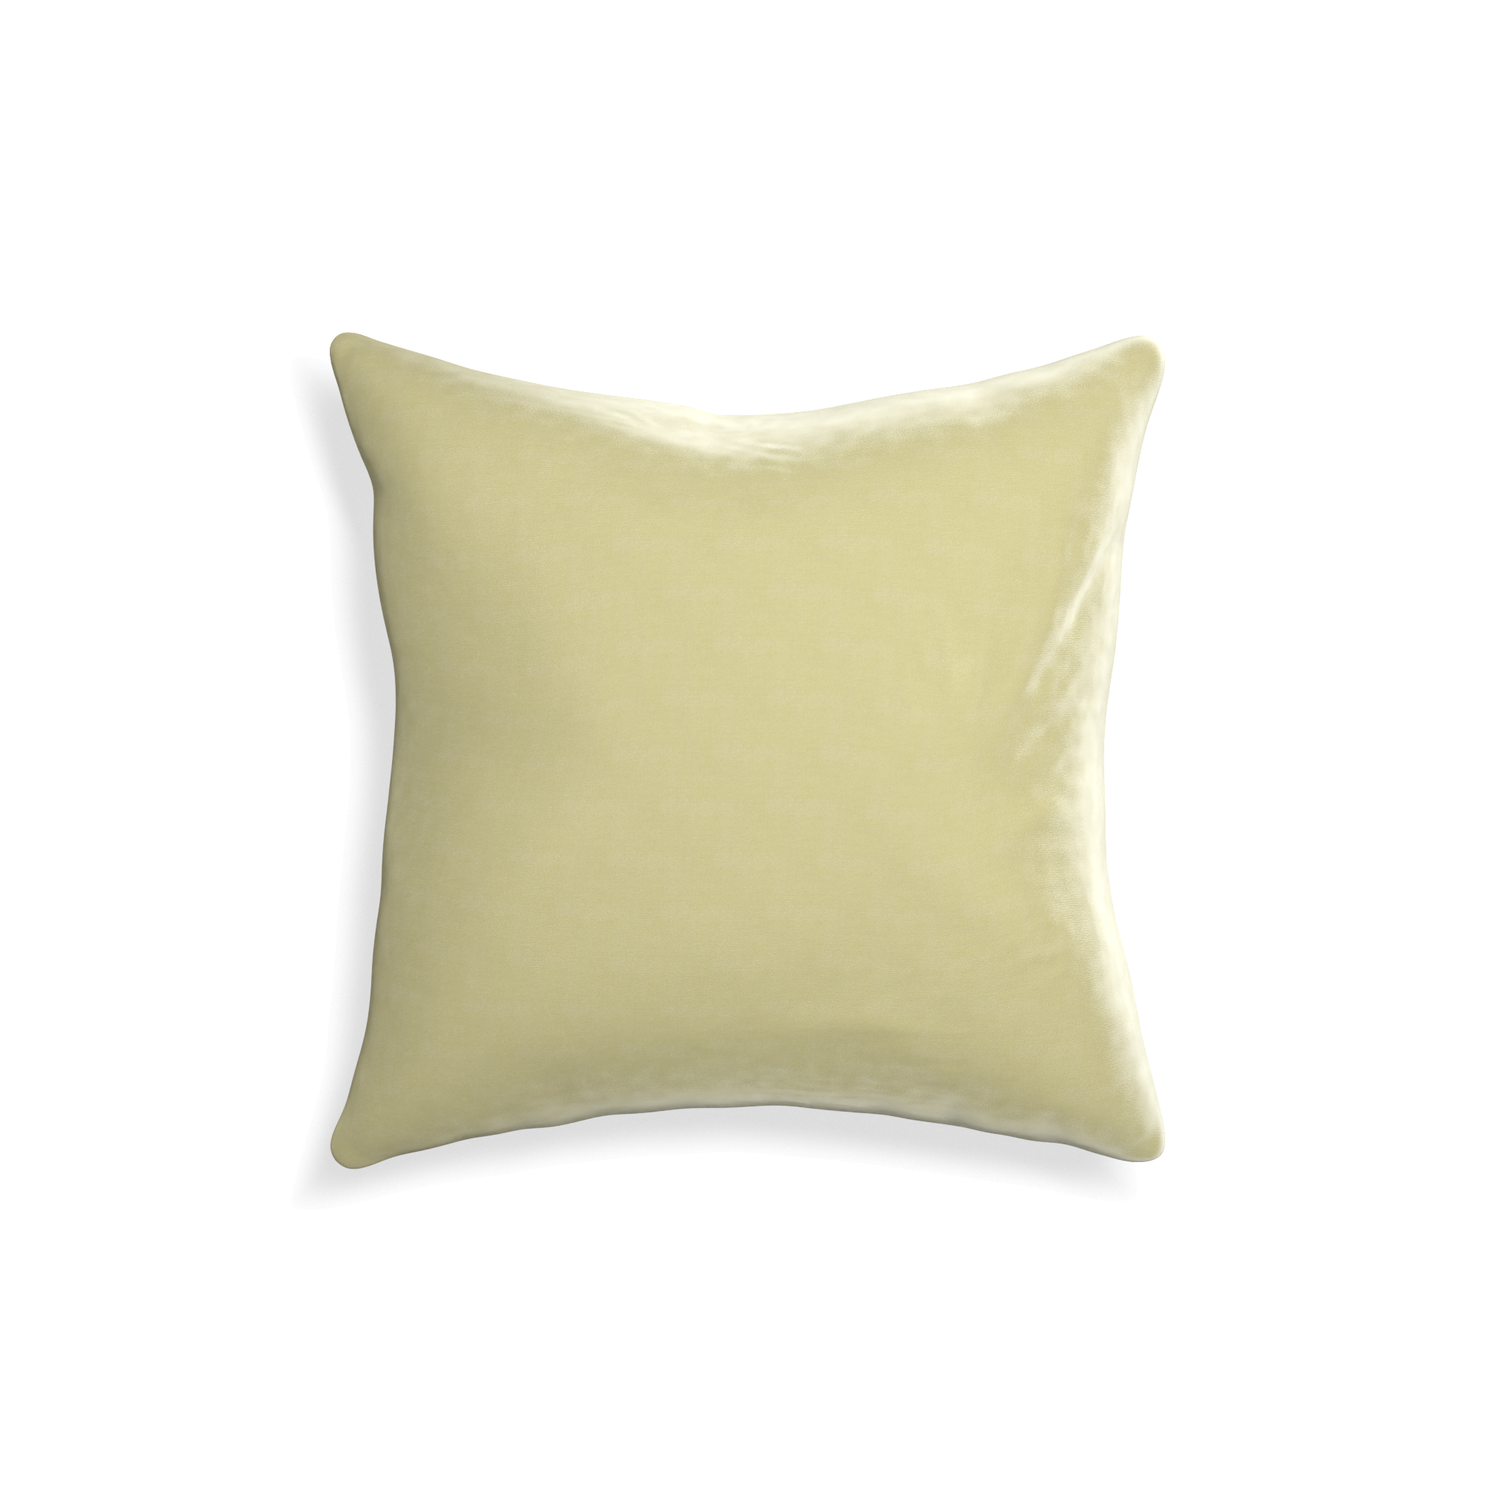 18-square pear velvet custom pillow with none on white background